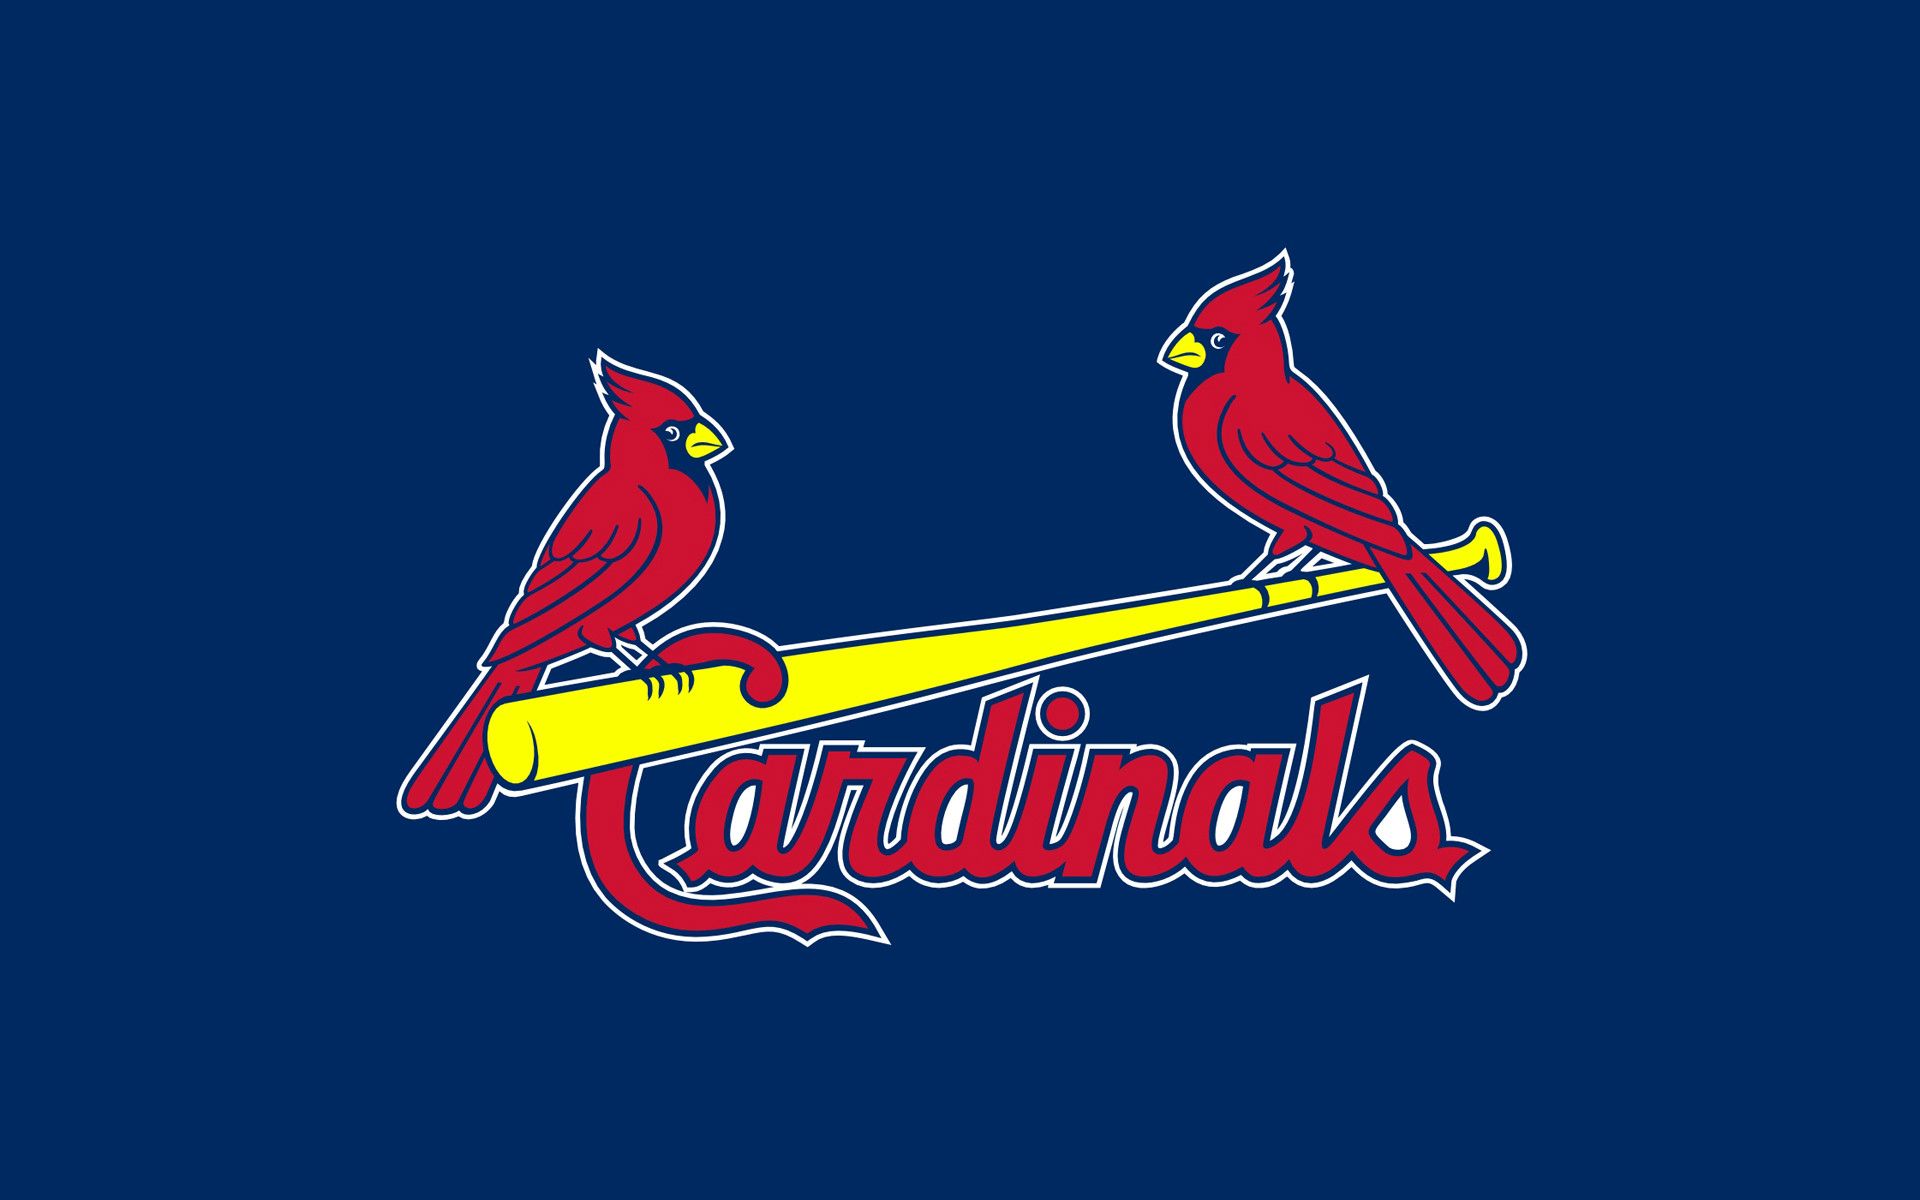 Baseball logo - Cardinals